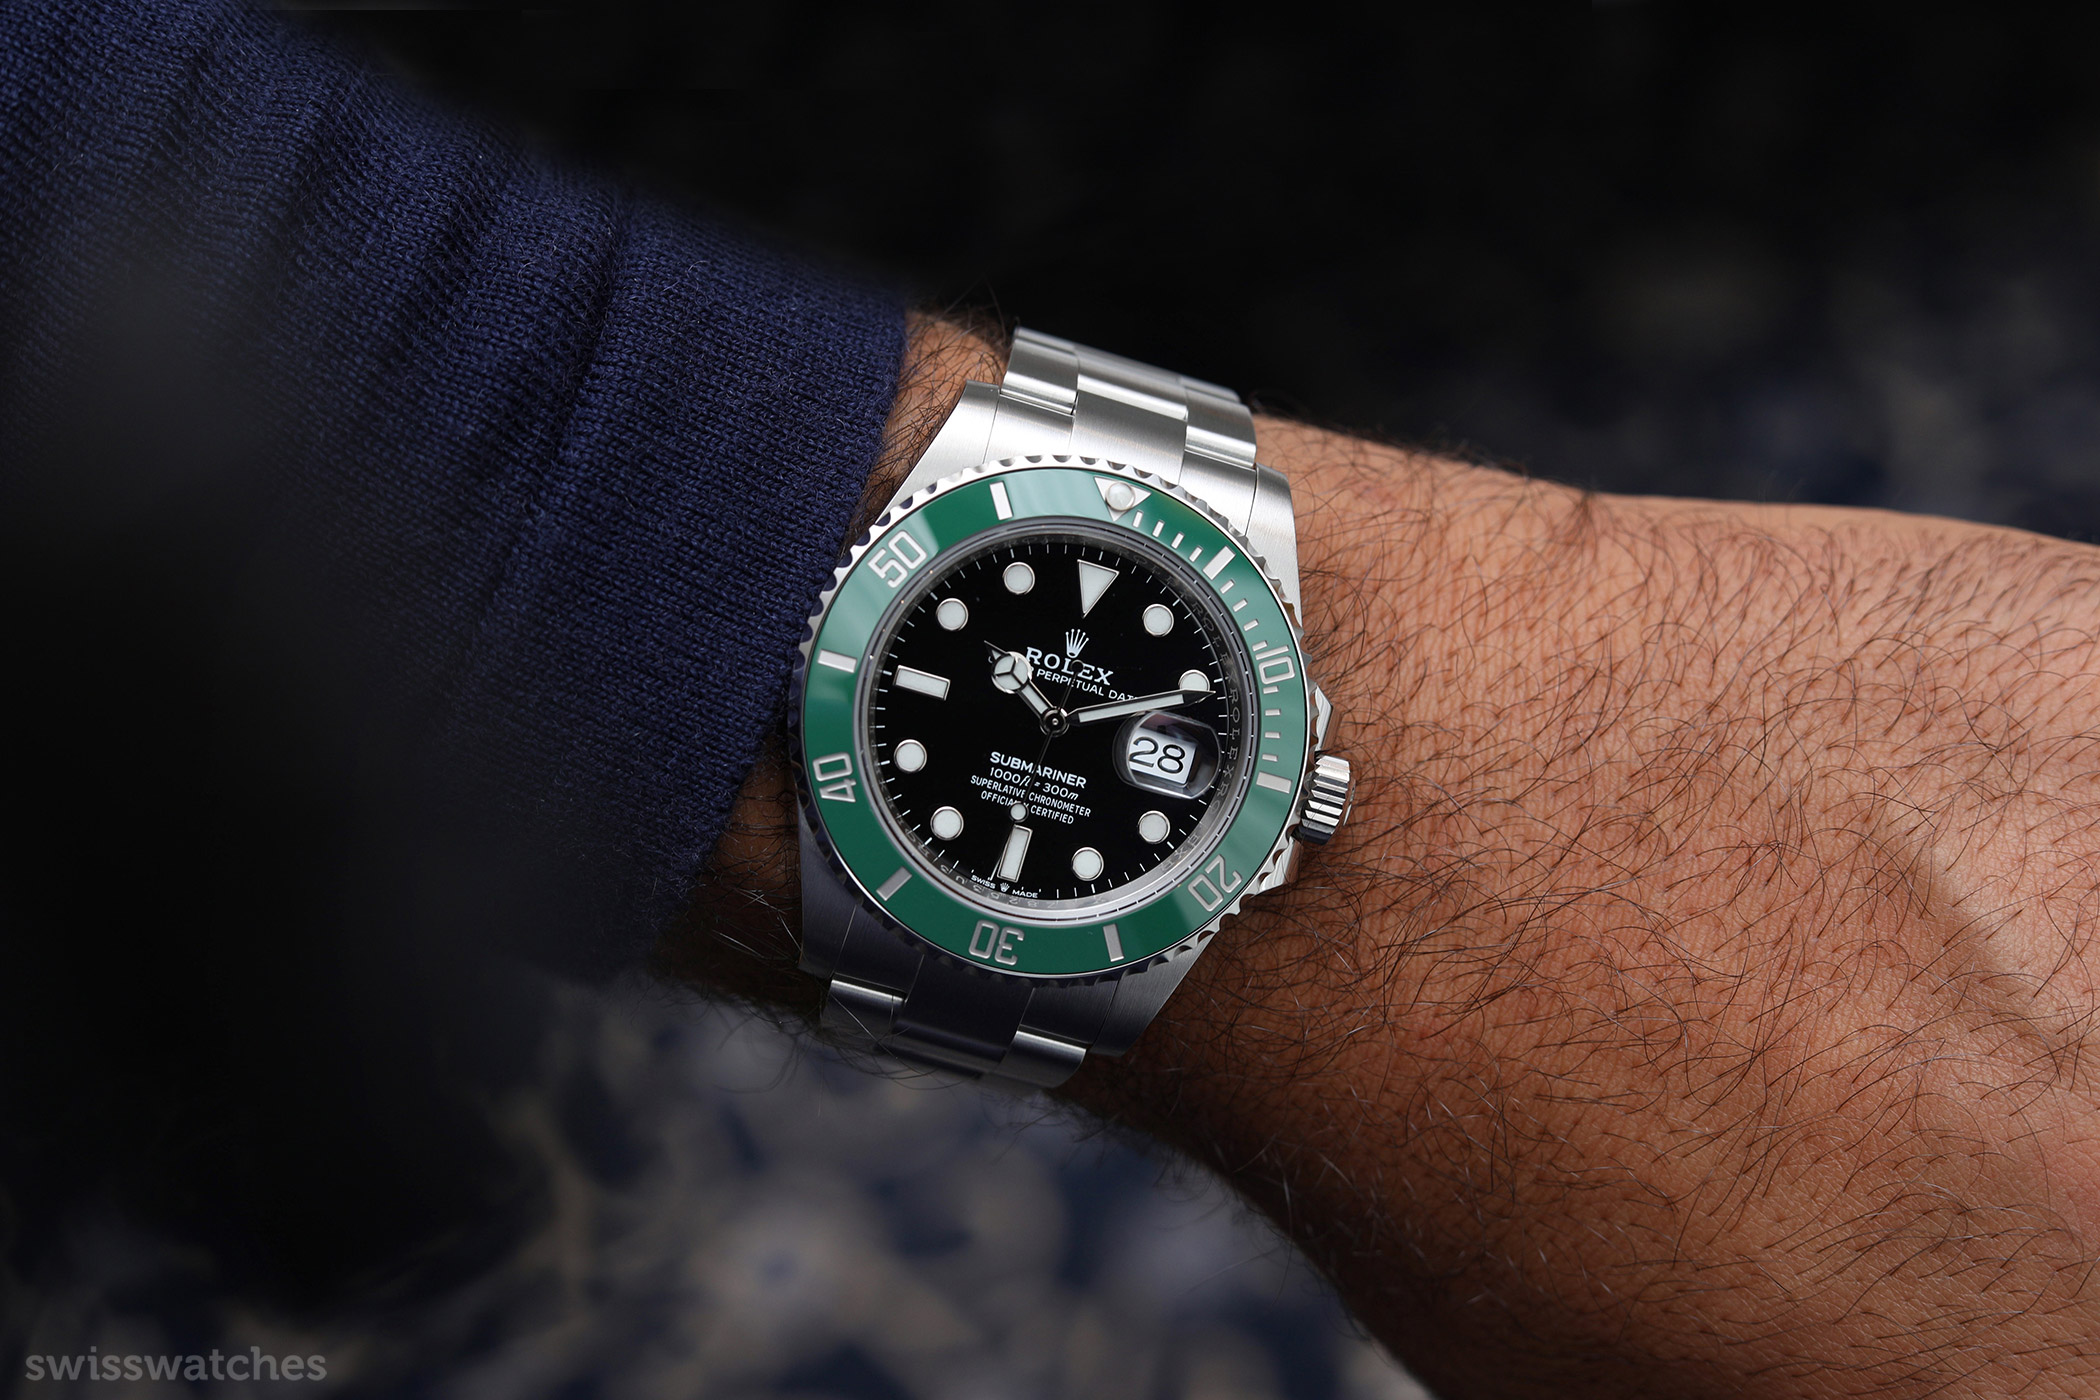 Rolex Submariner Ceramic 41 mm Watch Ref. # 126610lv